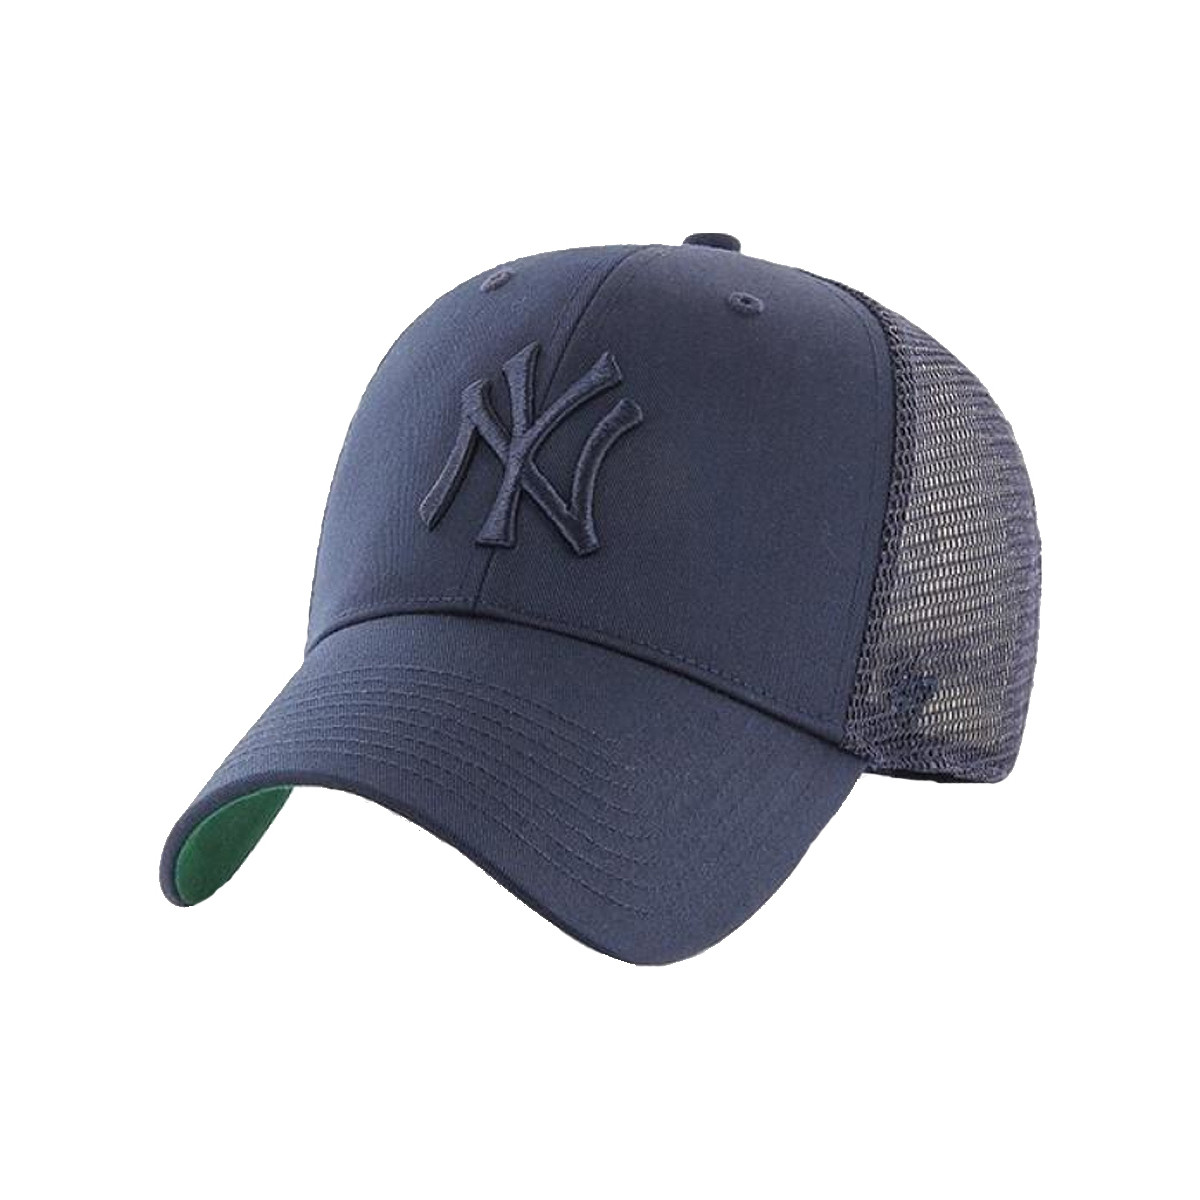 Accessories Kasketter '47 Brand MLB New York Yankees Branson Cap Blå